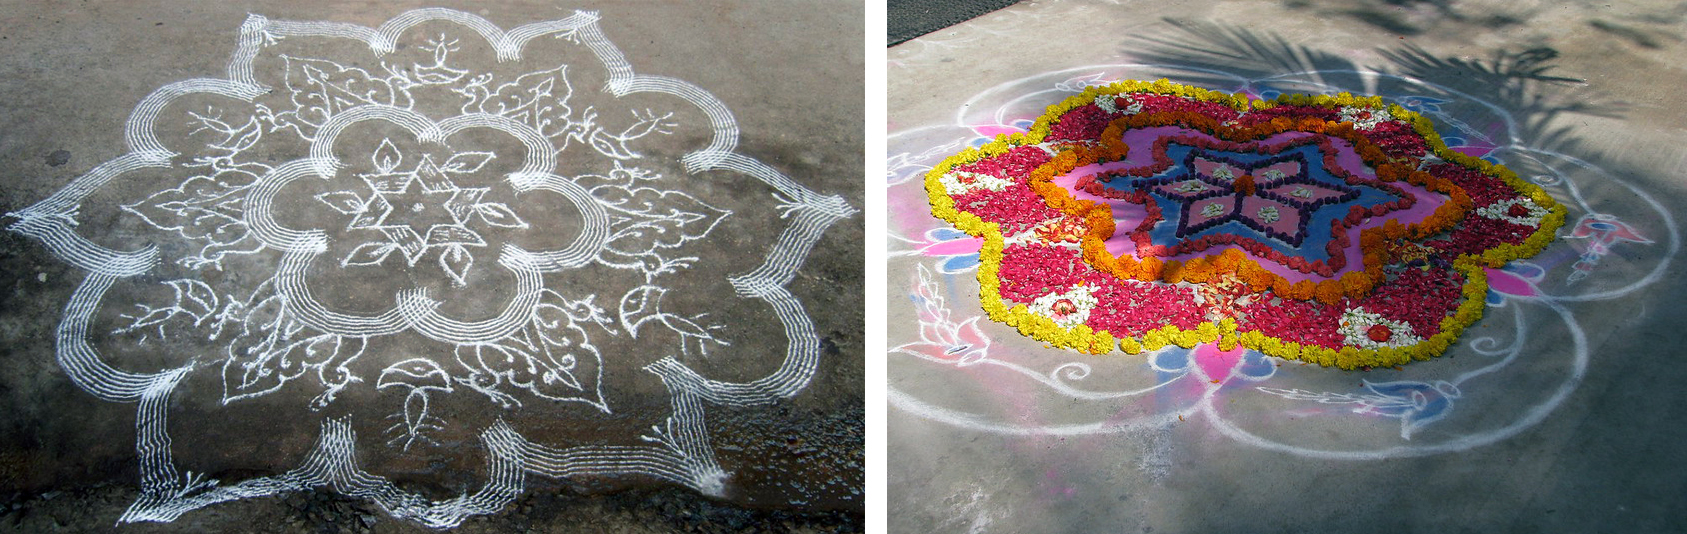 Izquierda: Rangoli en tiza (foto: ramya_aiyappan, CC BY-NC 2.0) Derecha: Rangoli en tiza y flores (foto: McKay Savage, CC BY 2.0)